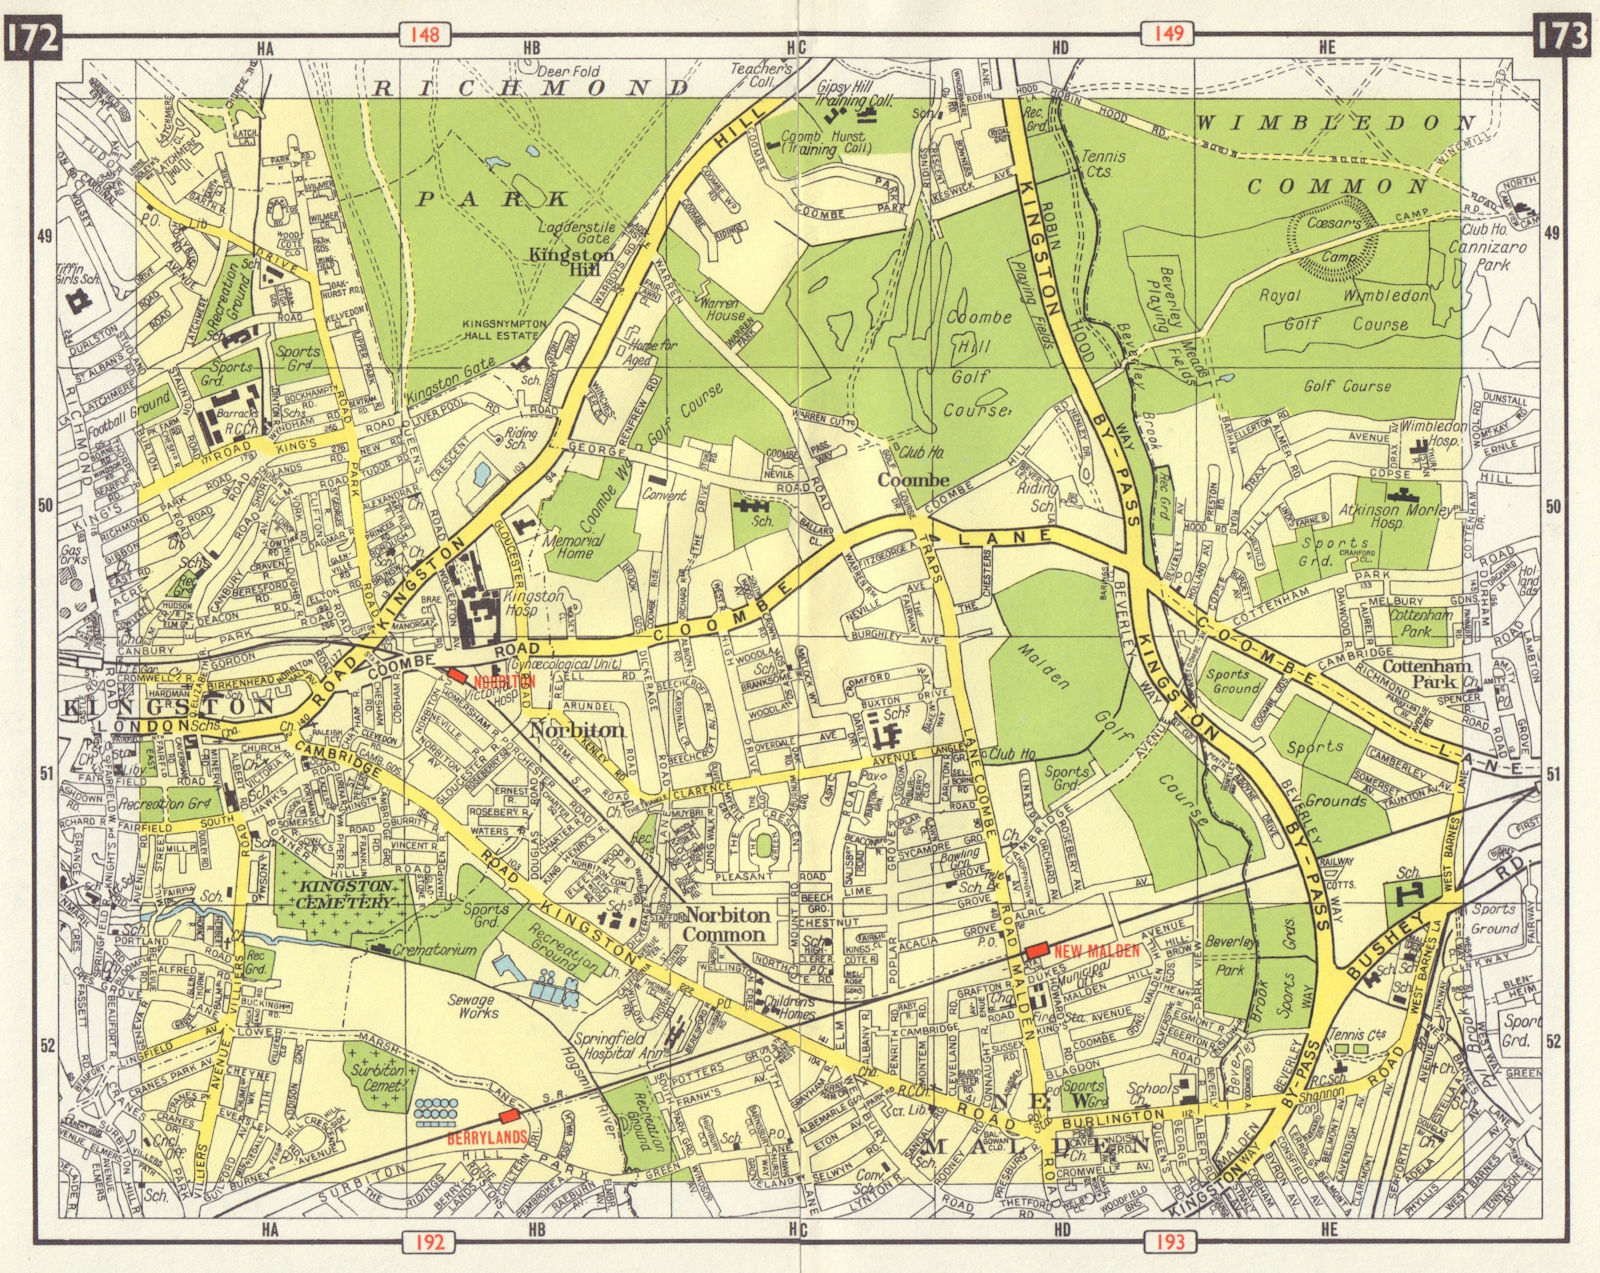 SW LONDON Kingston Coombe Norbiton New Malden Berrylands Wimbledon 1965 map